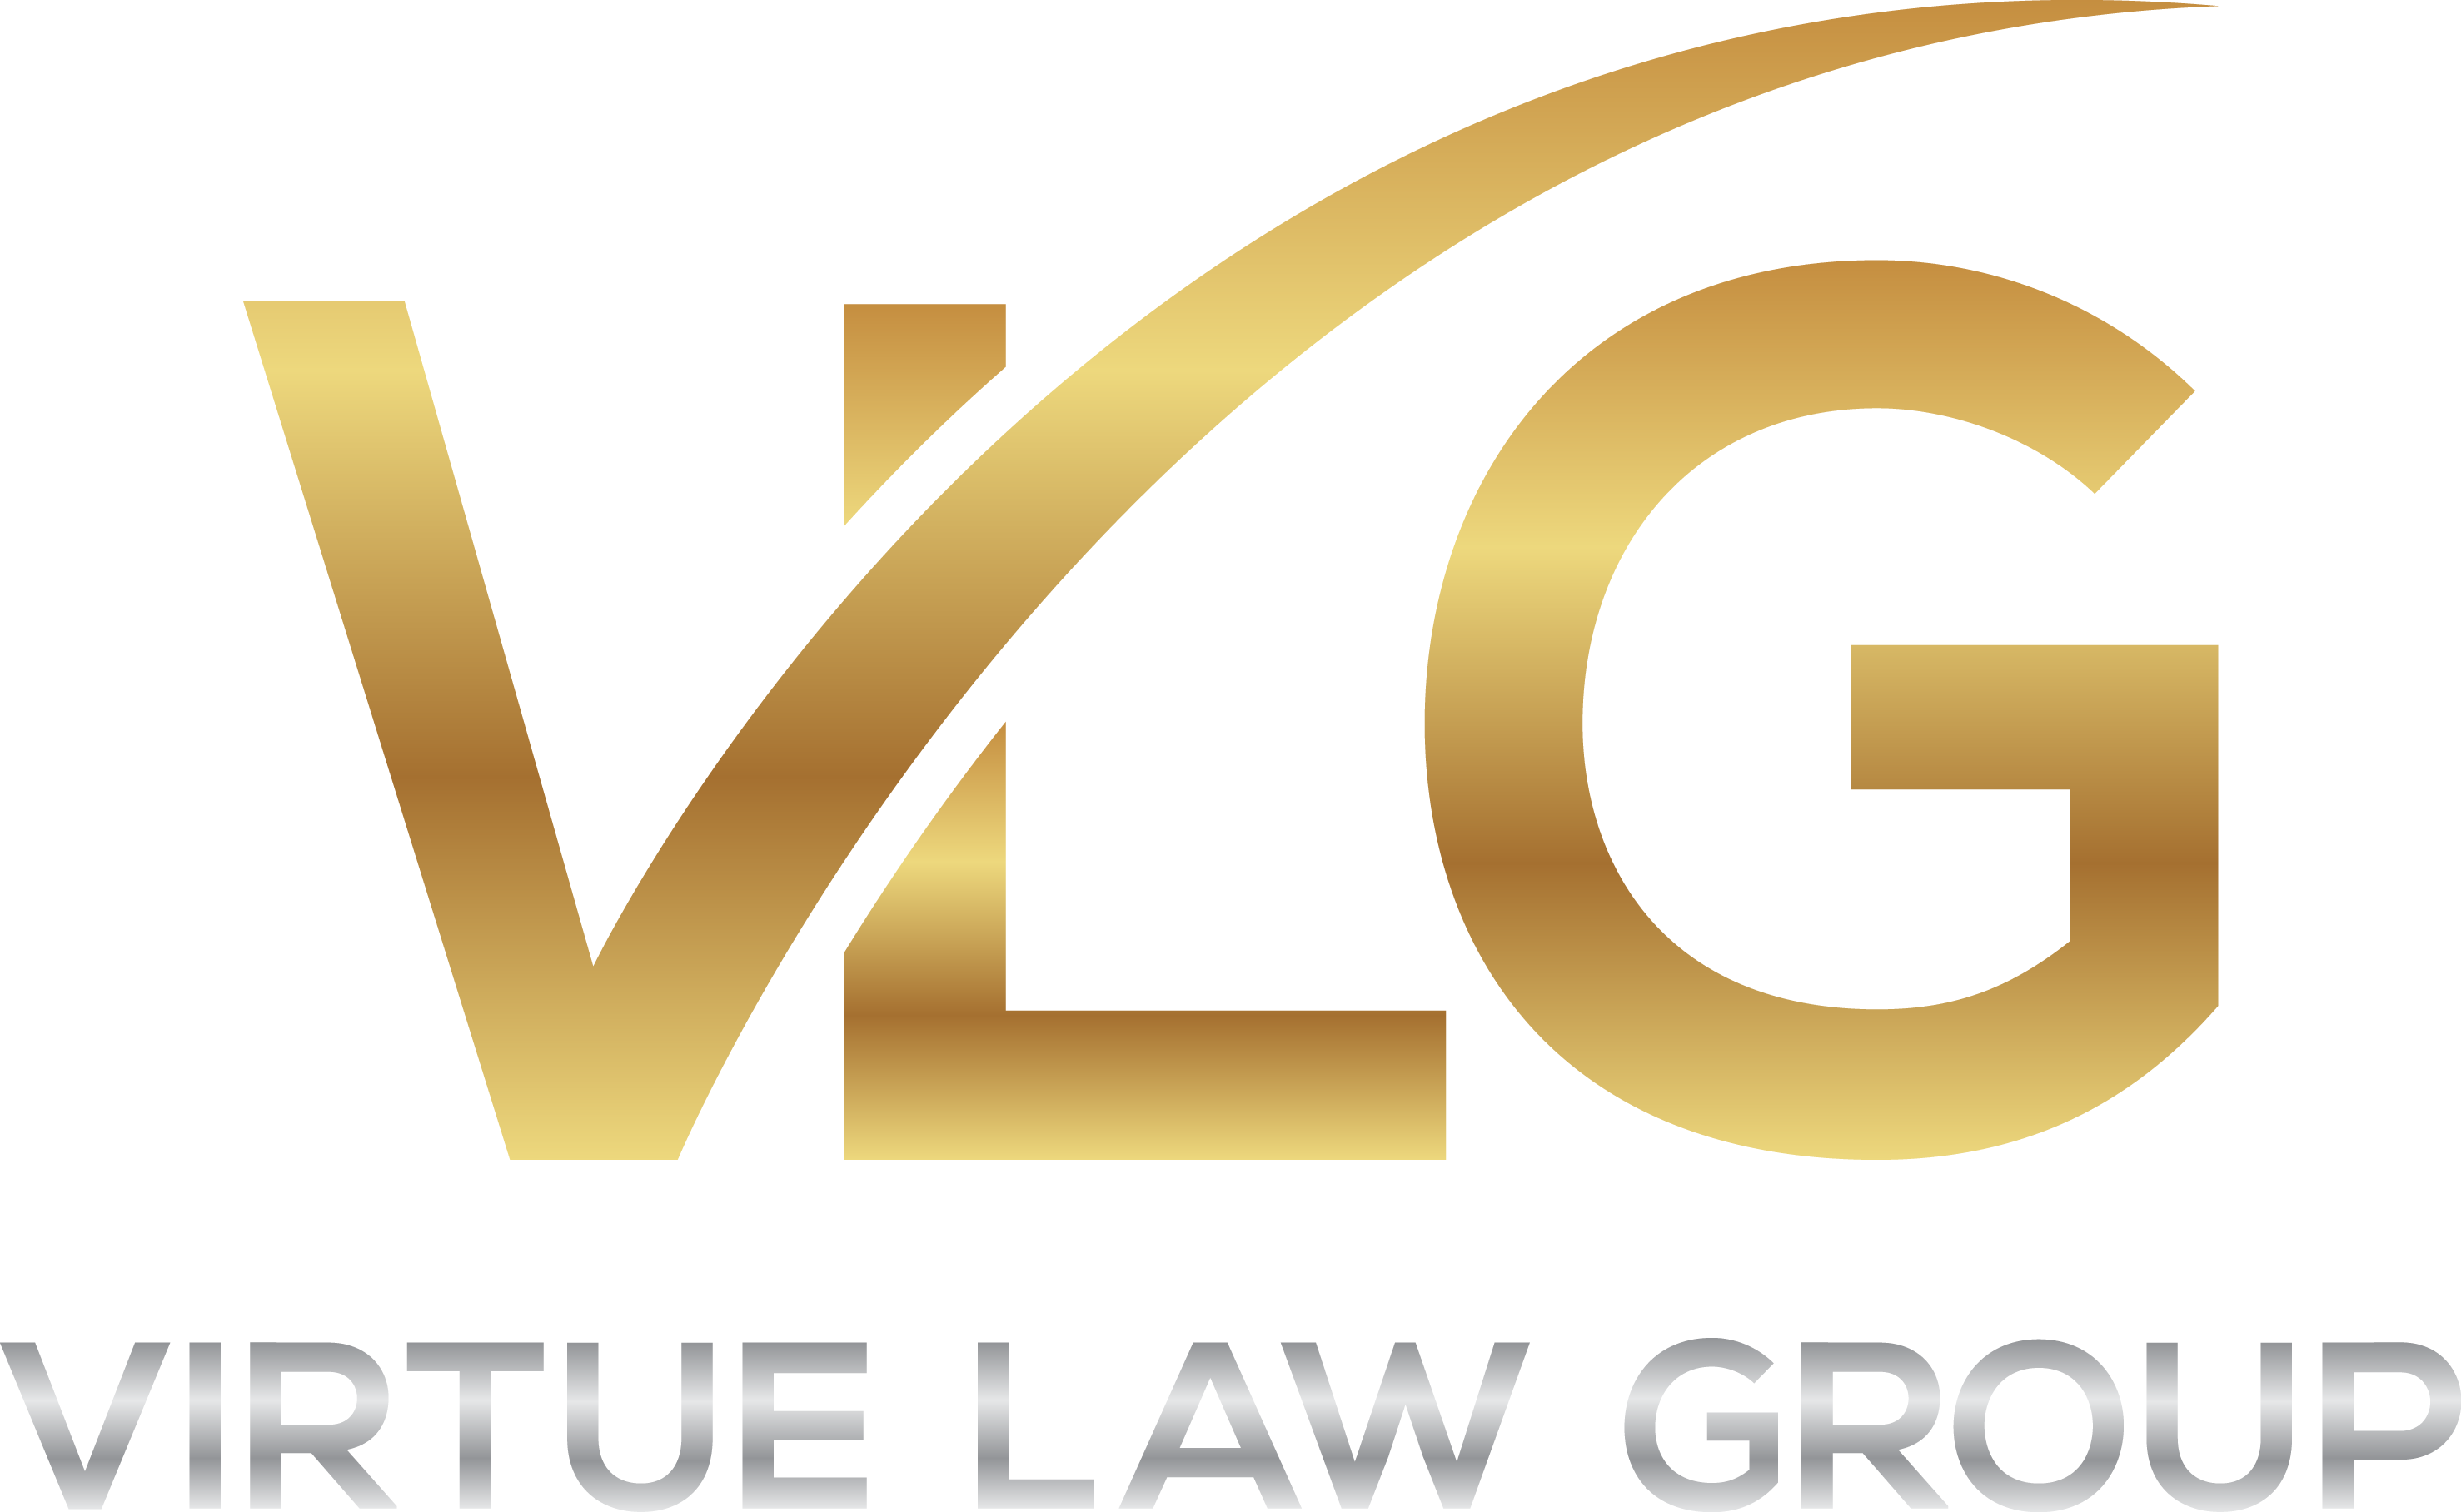 Virtue Law Group logo